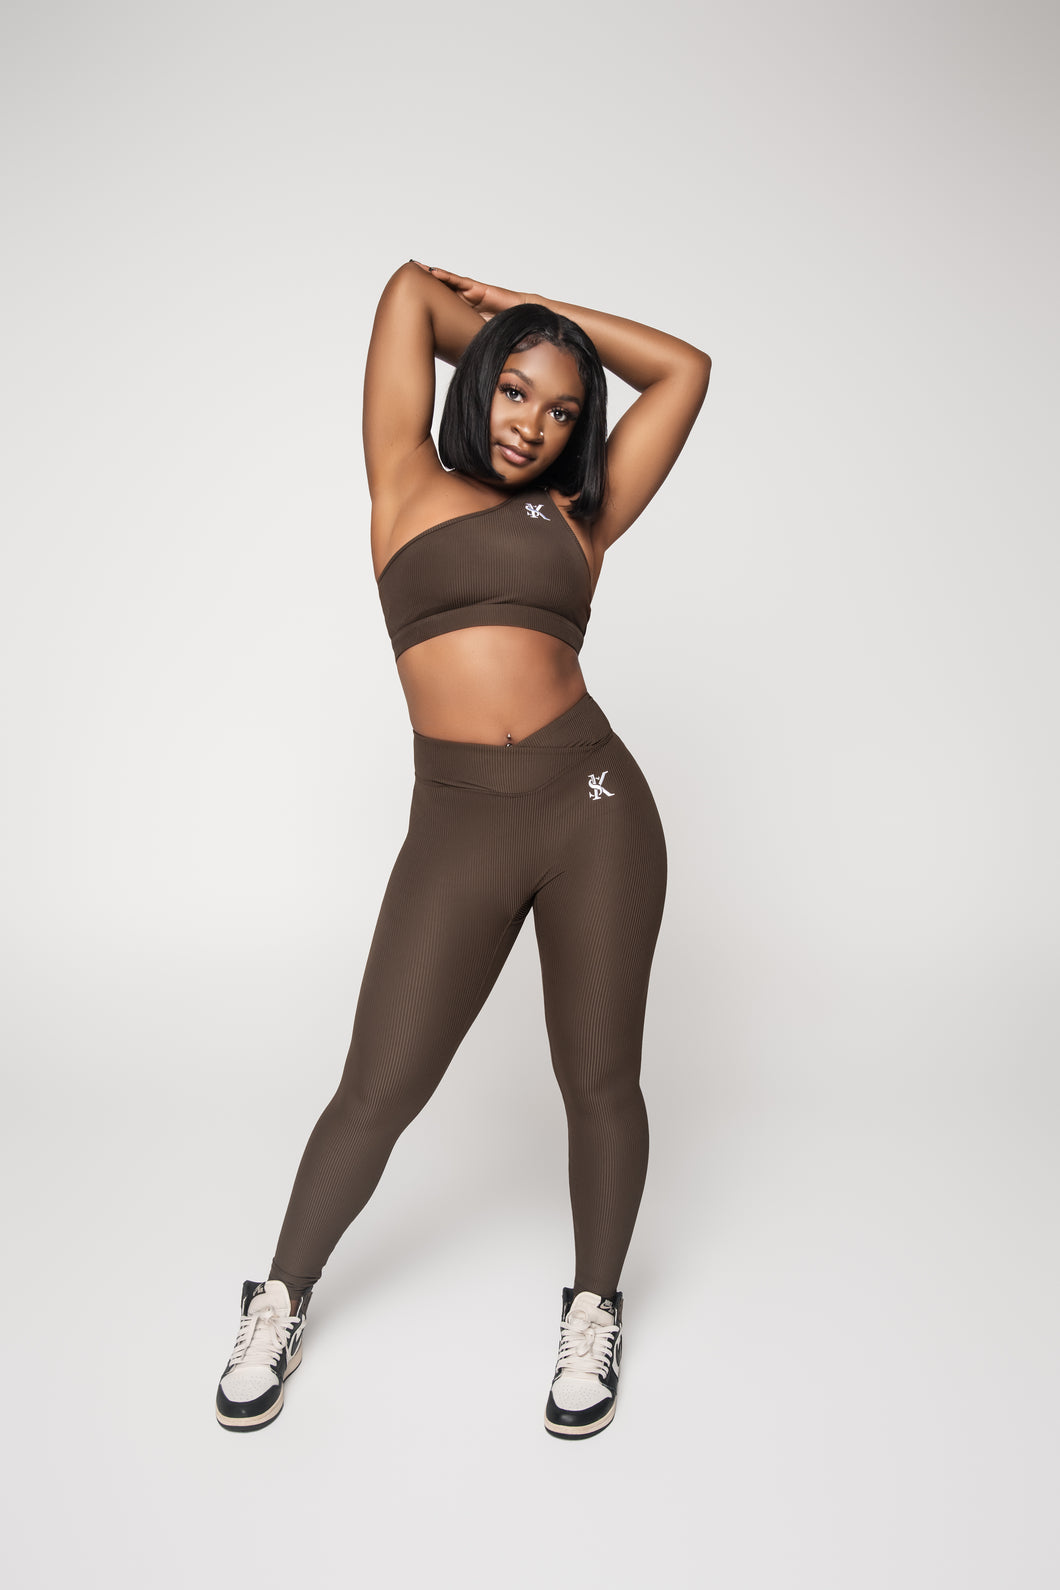 Ladies Coco Black sports bra fitness Top